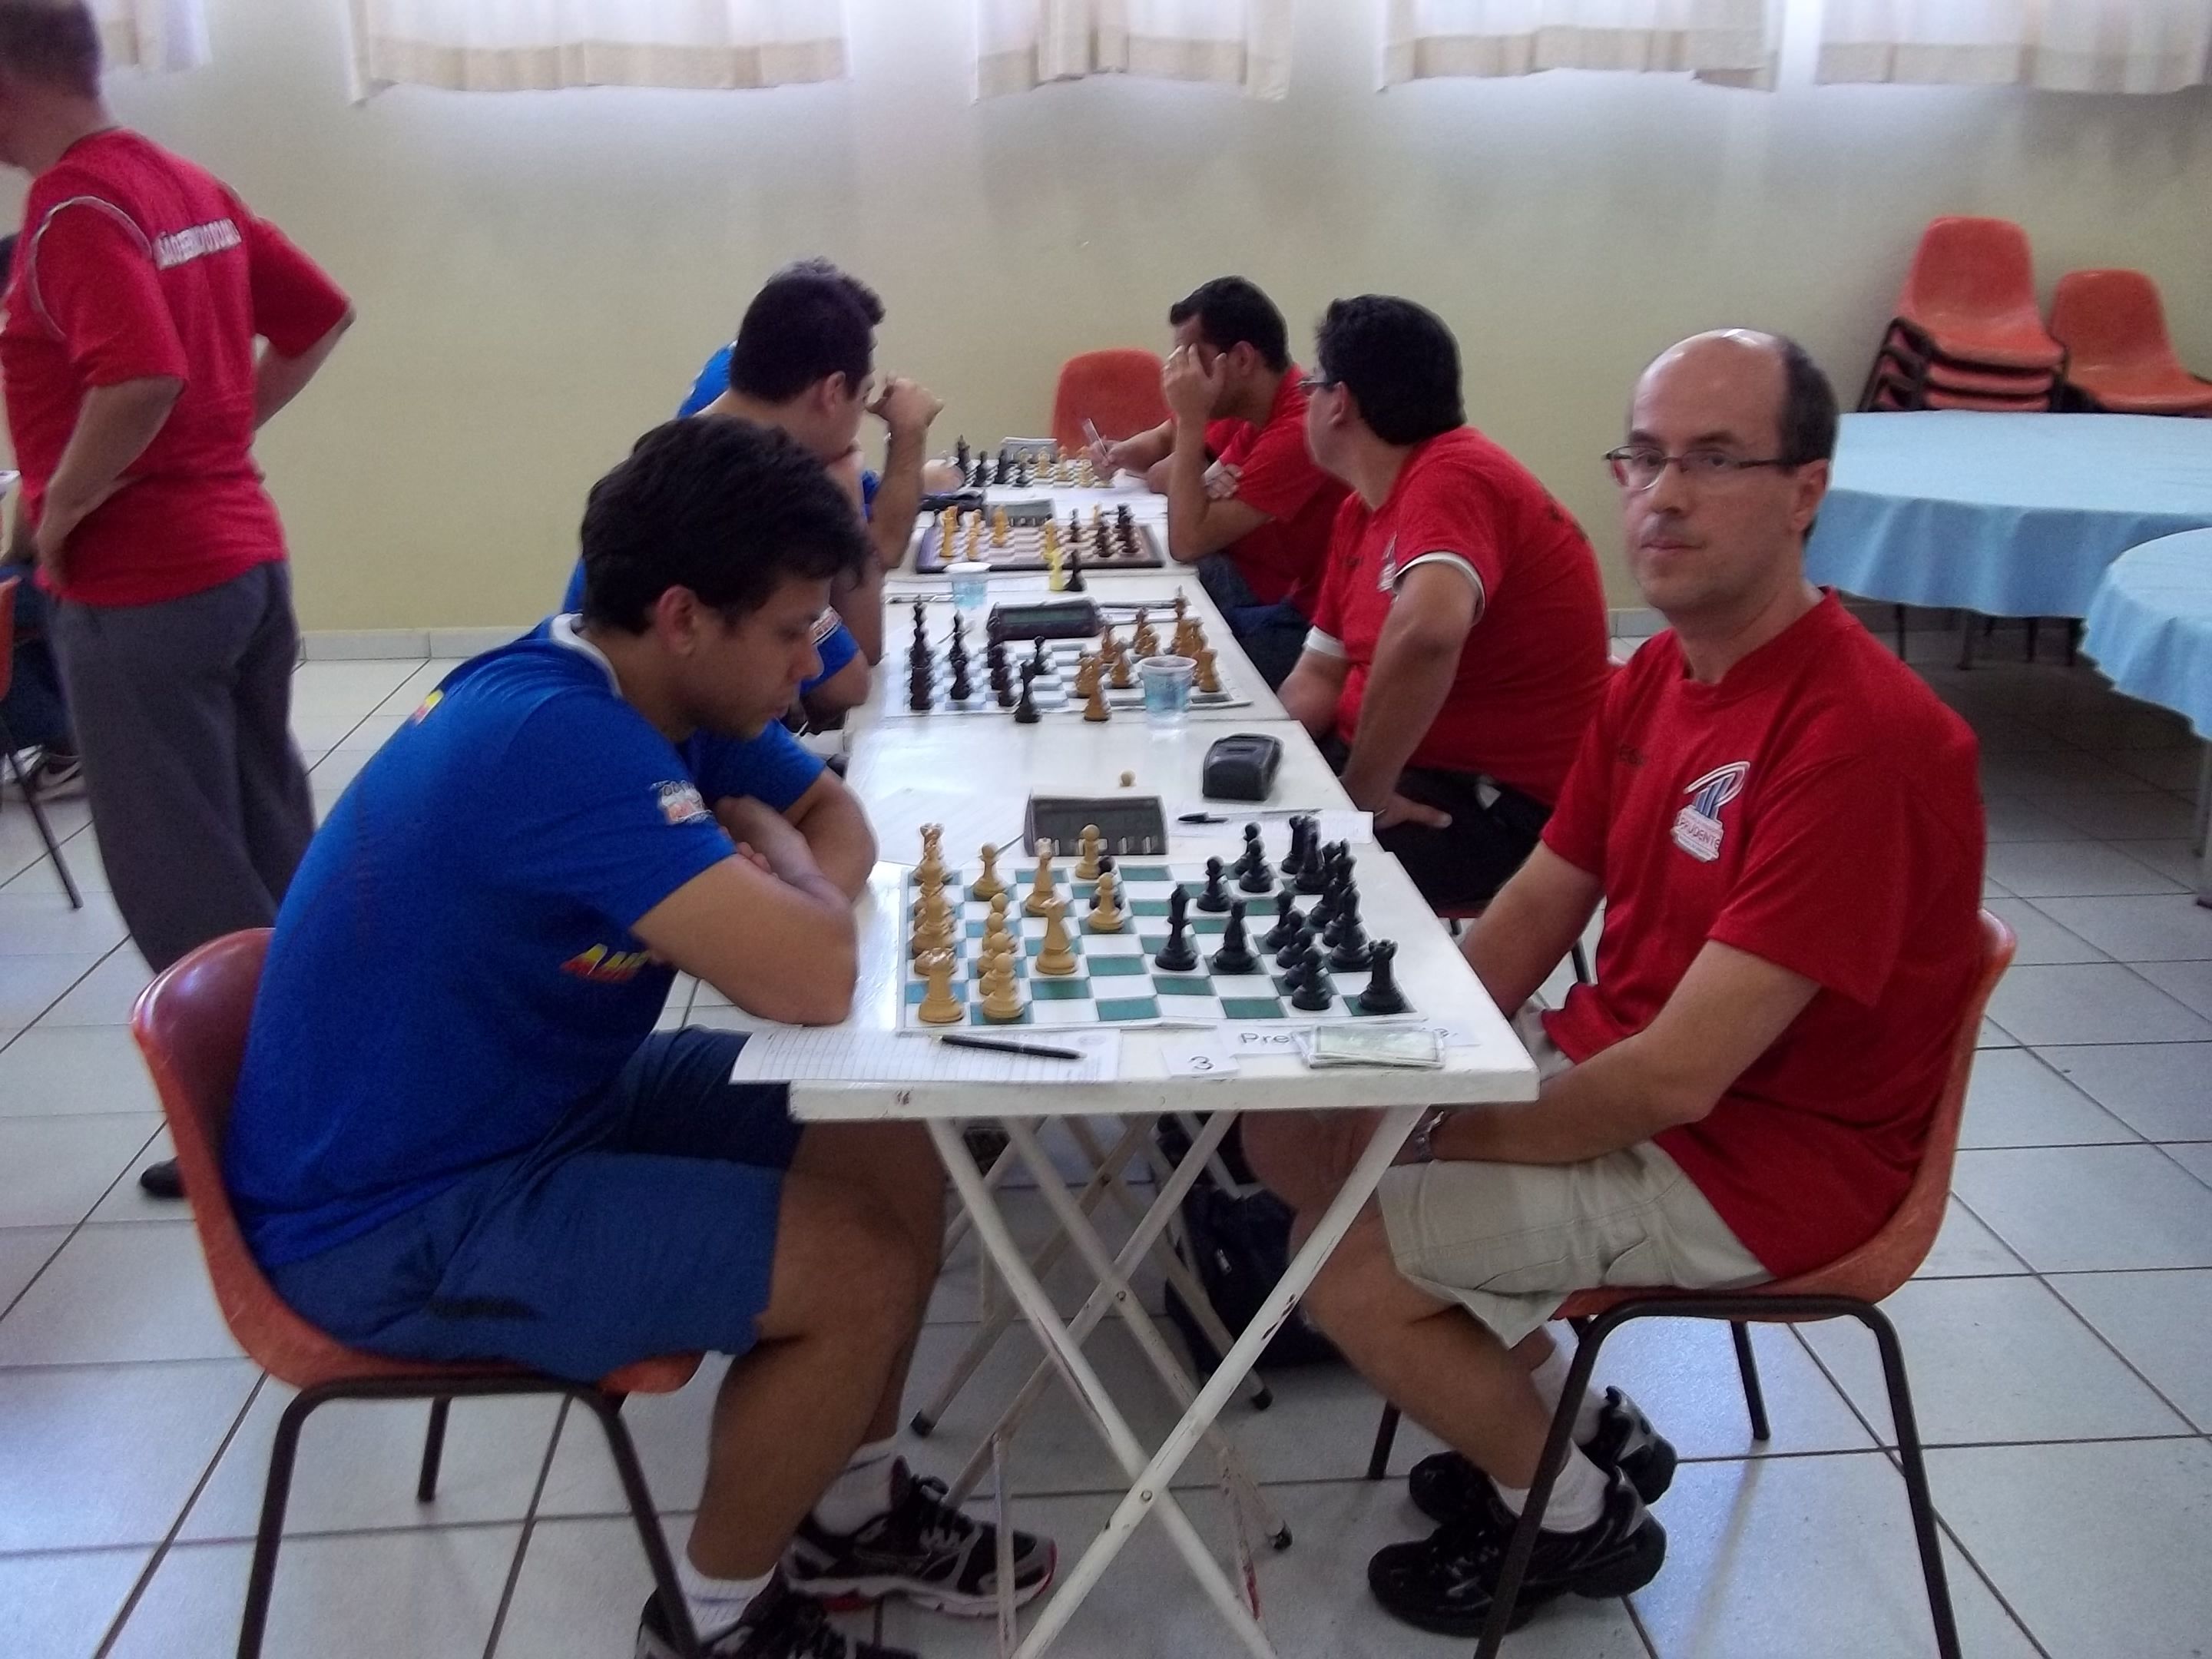 NM PAULO CÉSAR COSTA (PauloCesarCosta_sad) - Perfil de Xadrez